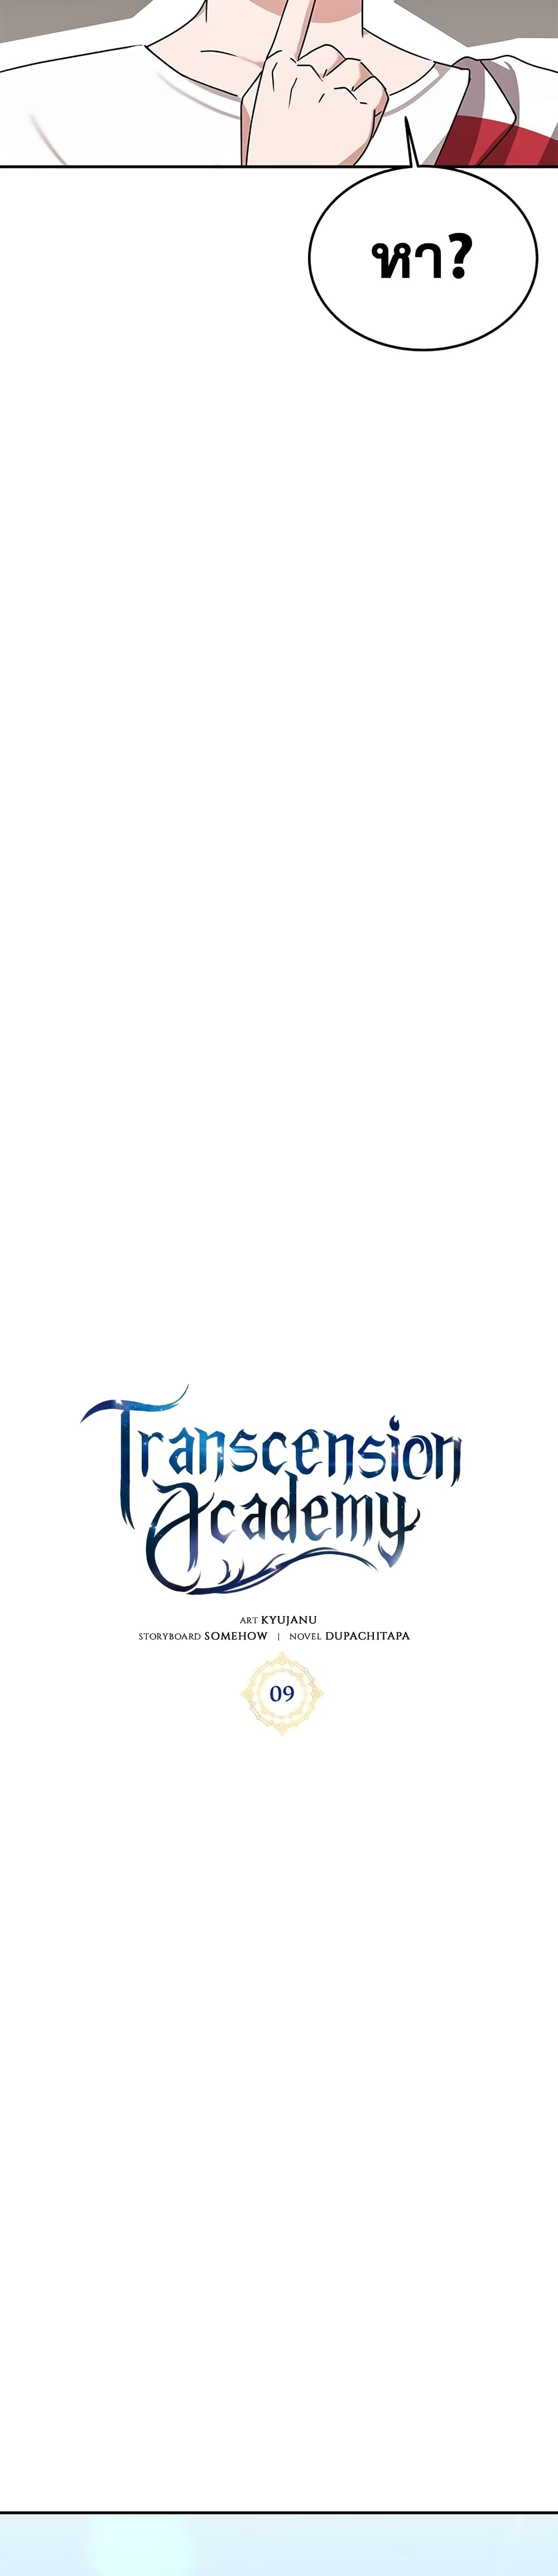 Transcension Academy ตอนที่ 9 (13)